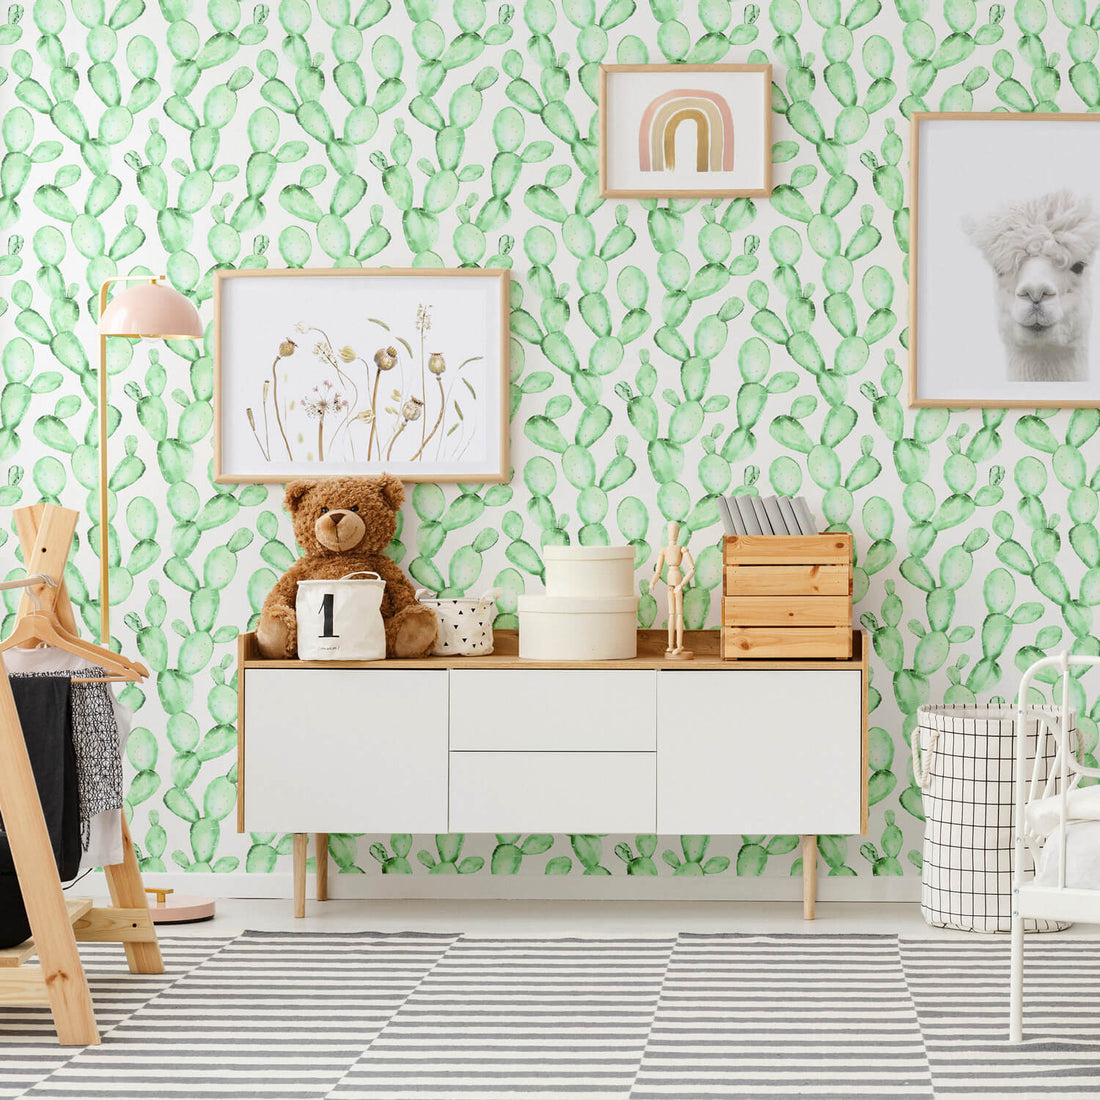 light green blurred effect cactus inspired wallpaper design for neutral baby nursery